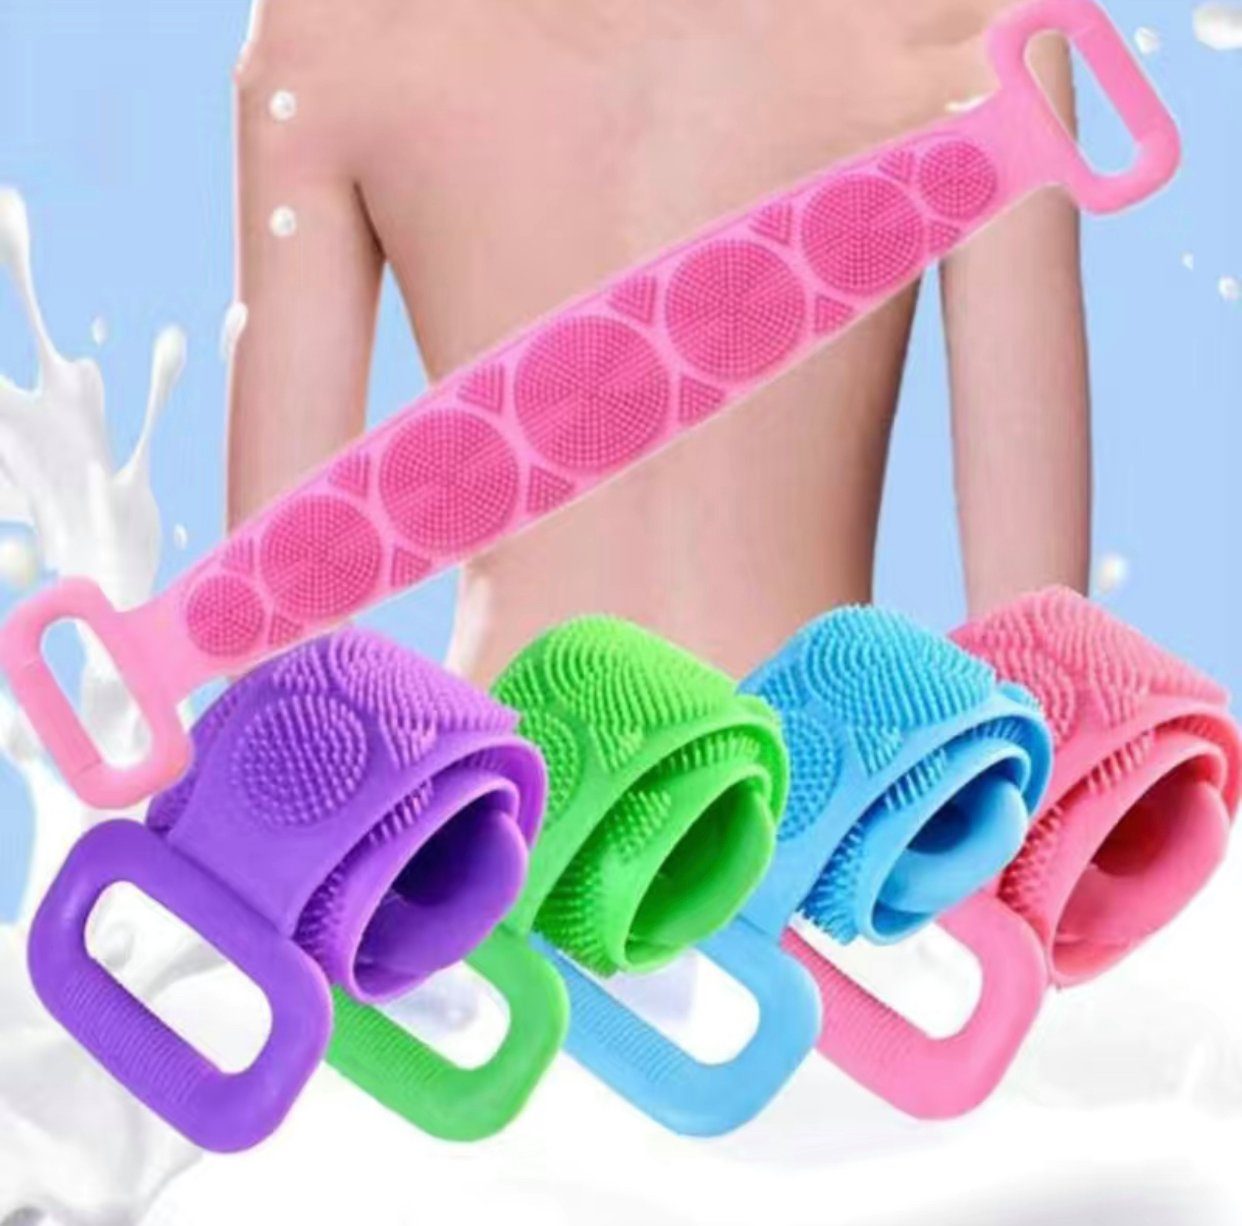 DENU-Home Badebürste Rückenbürste Körperbürste Silikon wasserfest, Waschen, Peeling Duschbürste Massage mit Rückenbürste 60cm